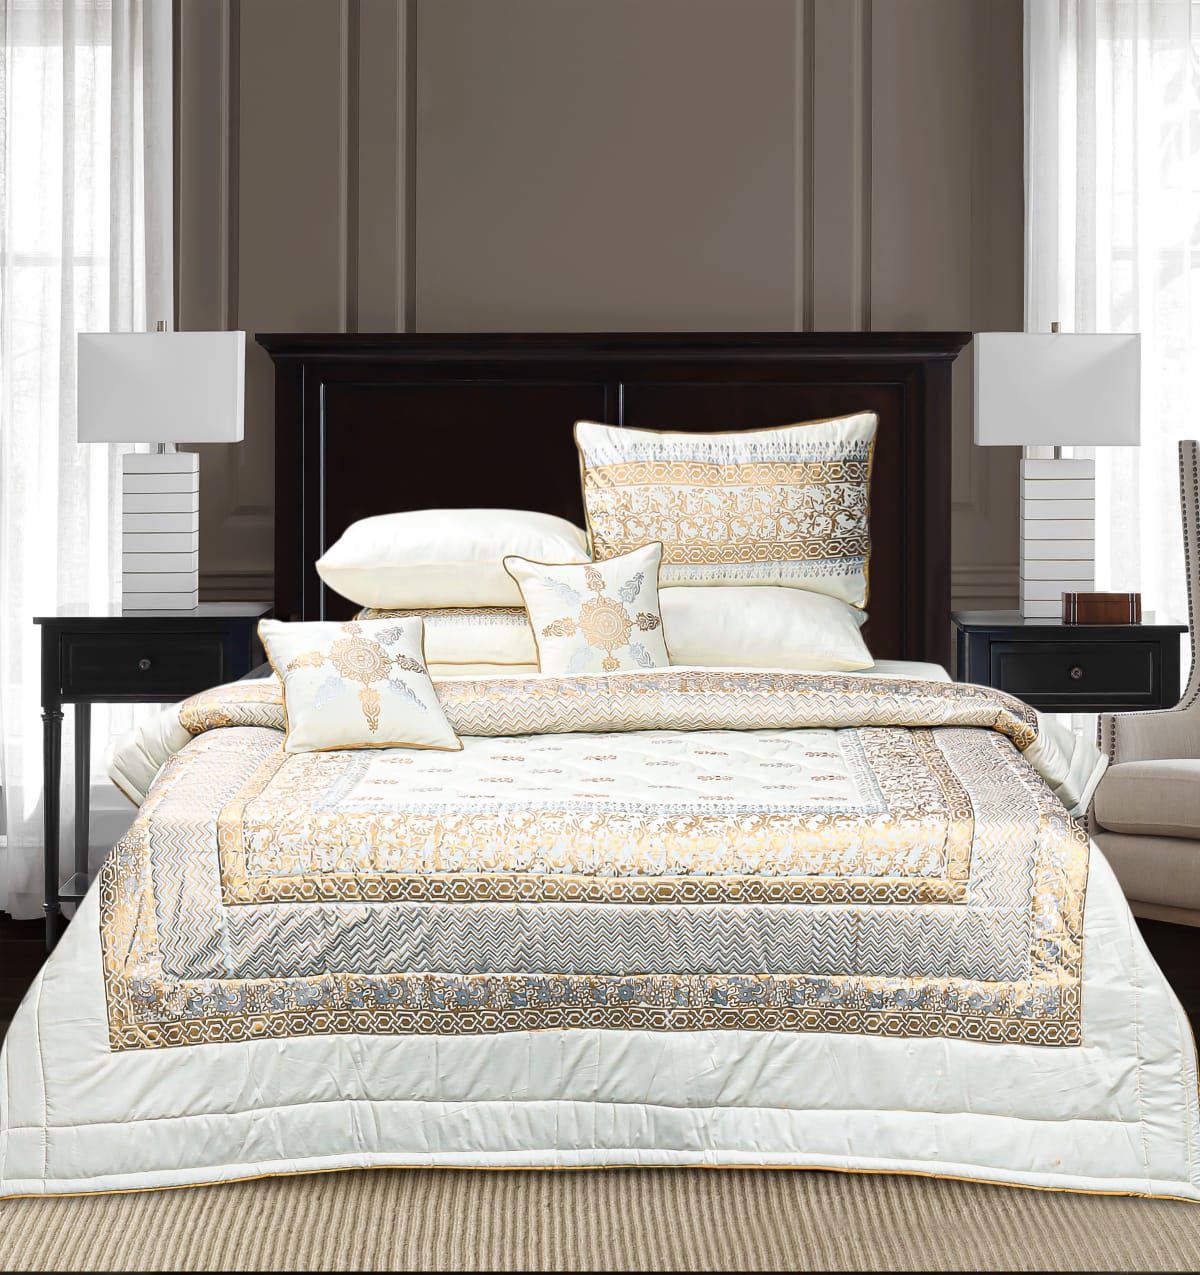 8 Pcs Bridal Bed Sheet Comforter Set Cotton Sateen Block Printed – Orvieto